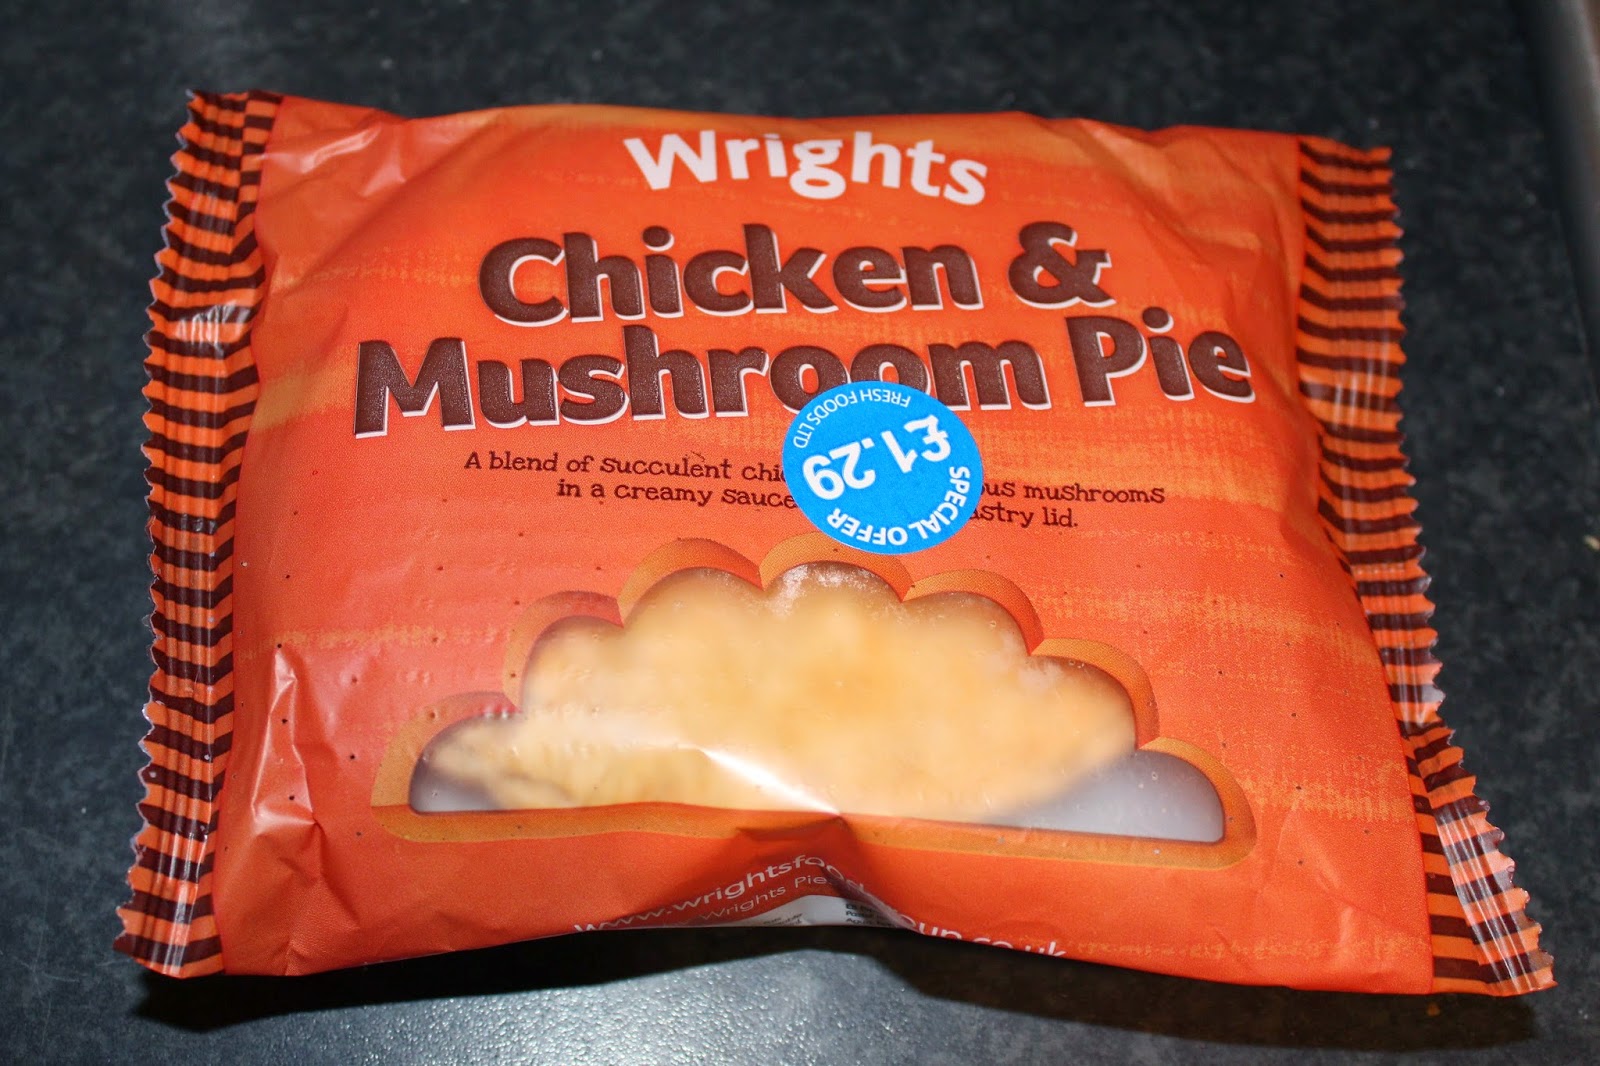 Wrights Chicken & Mushroom Pie